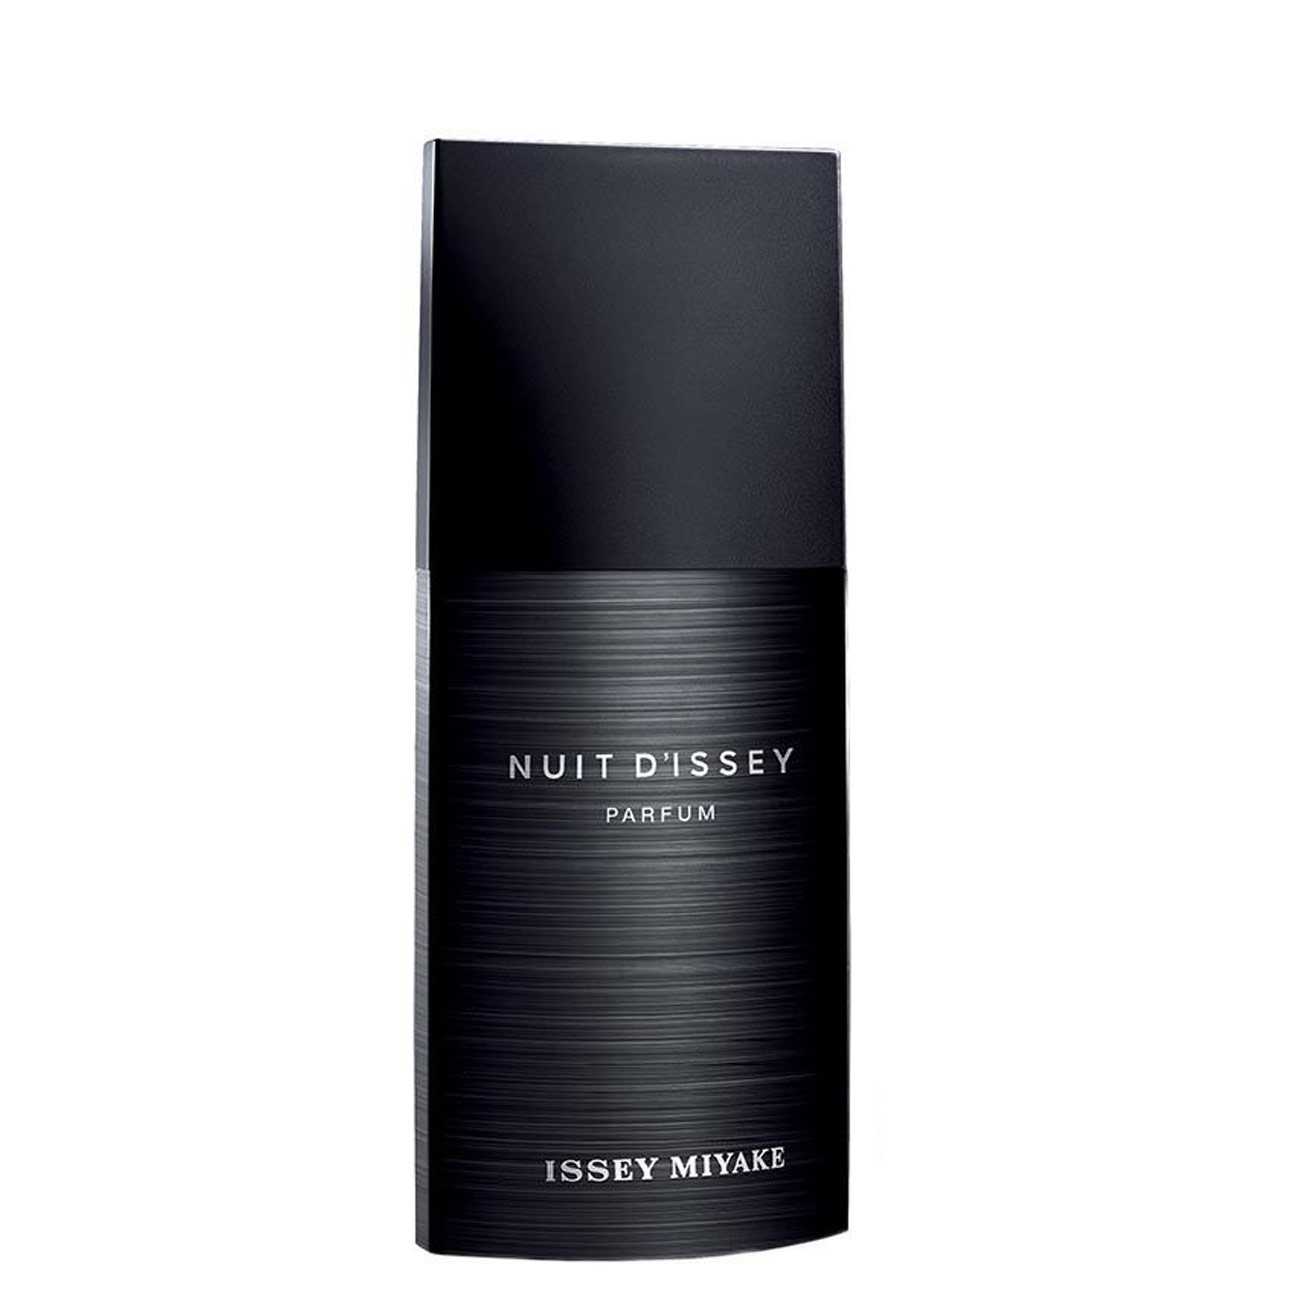 Apa de Parfum Issey Miyake NUIT D’ISSEY PARFUM 125ml cu comanda online